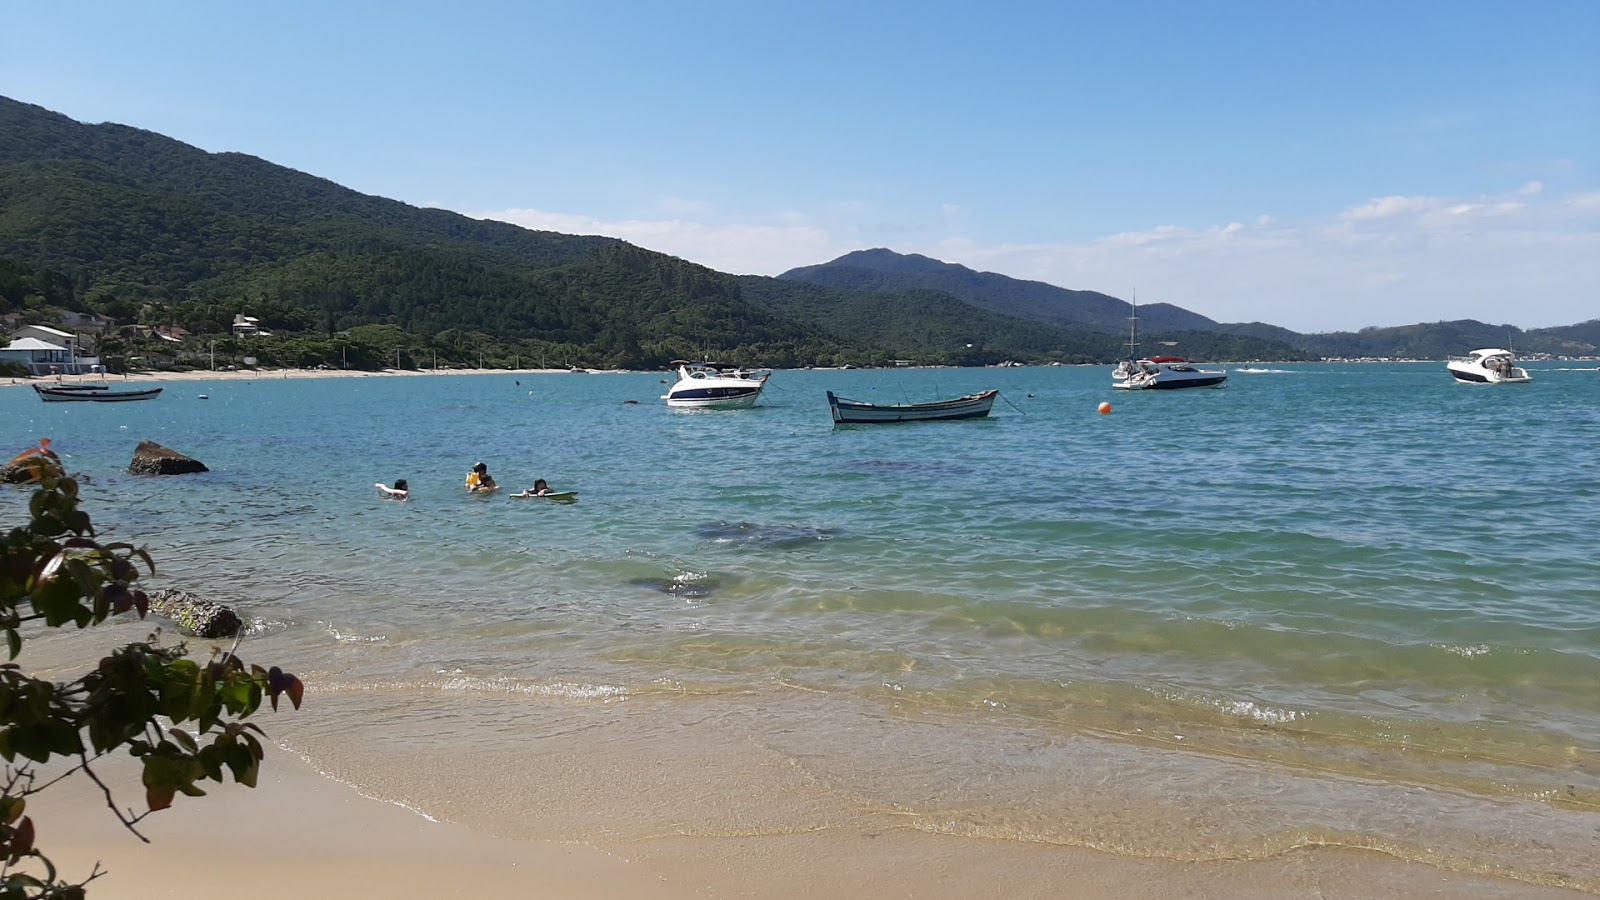 Fotografie cu Praia dos Magalhaes - locul popular printre cunoscătorii de relaxare